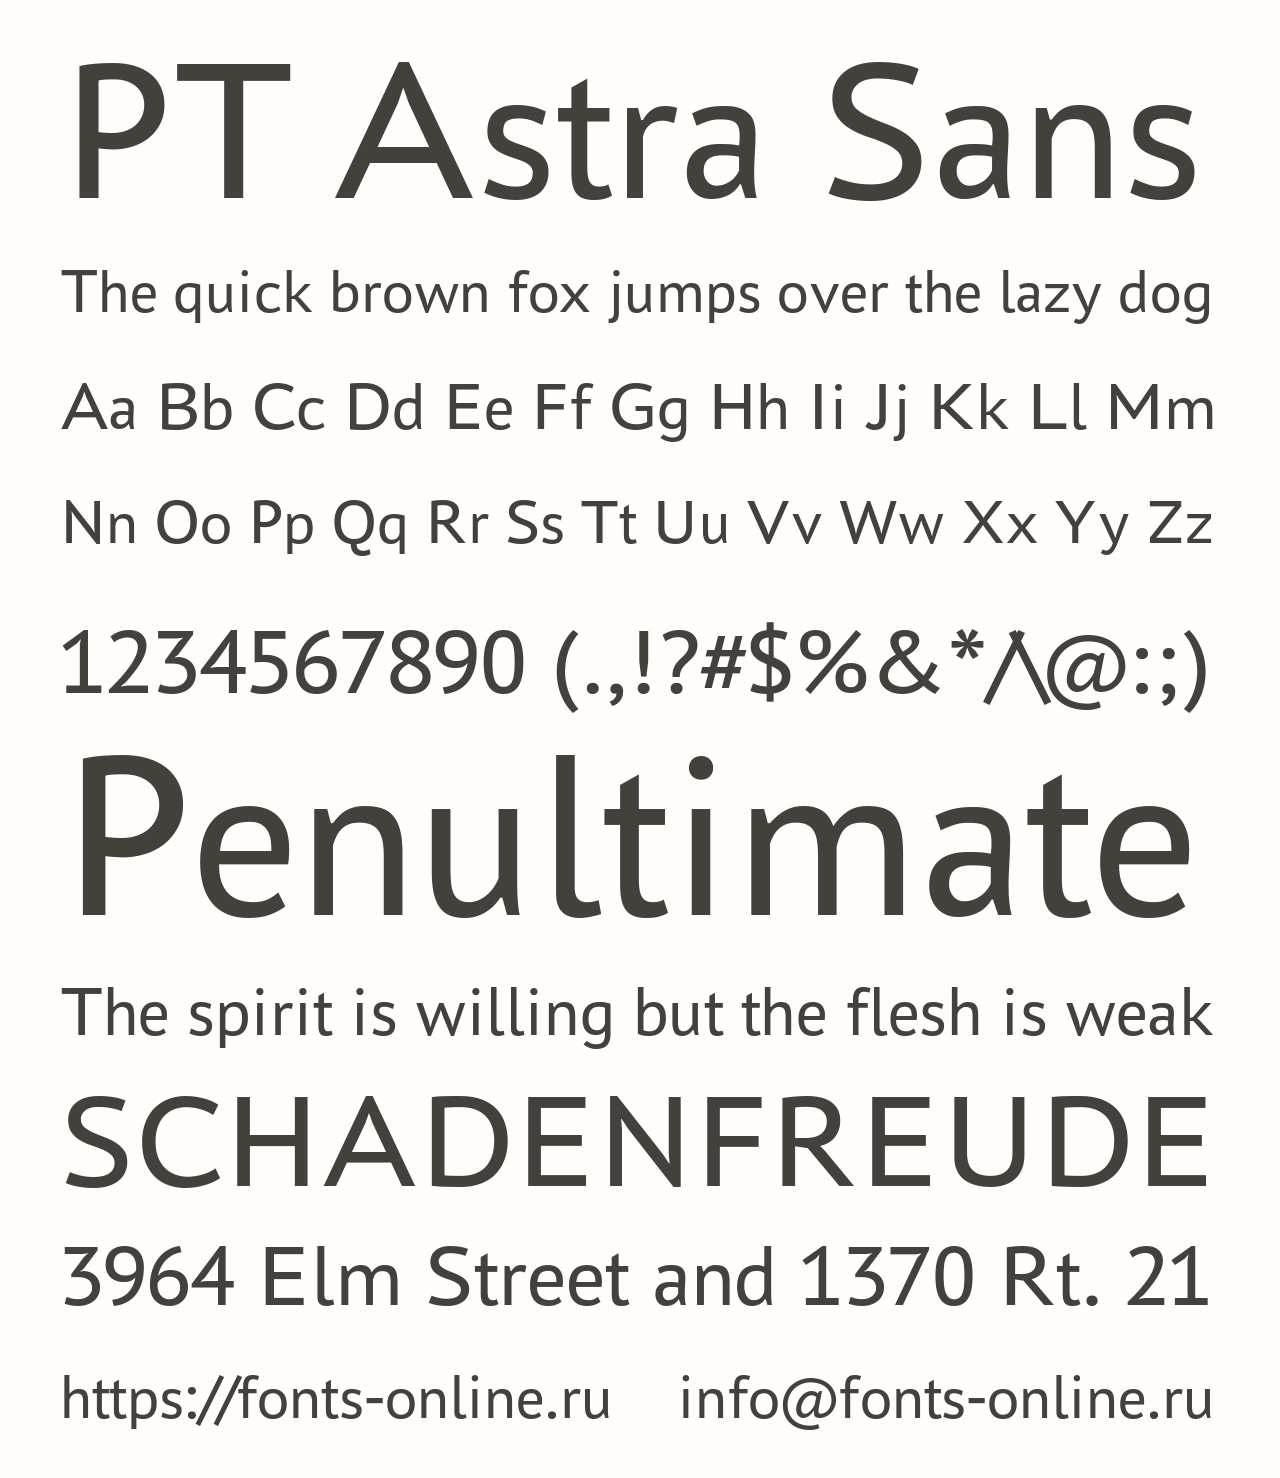 Шрифт PT Astra Sans